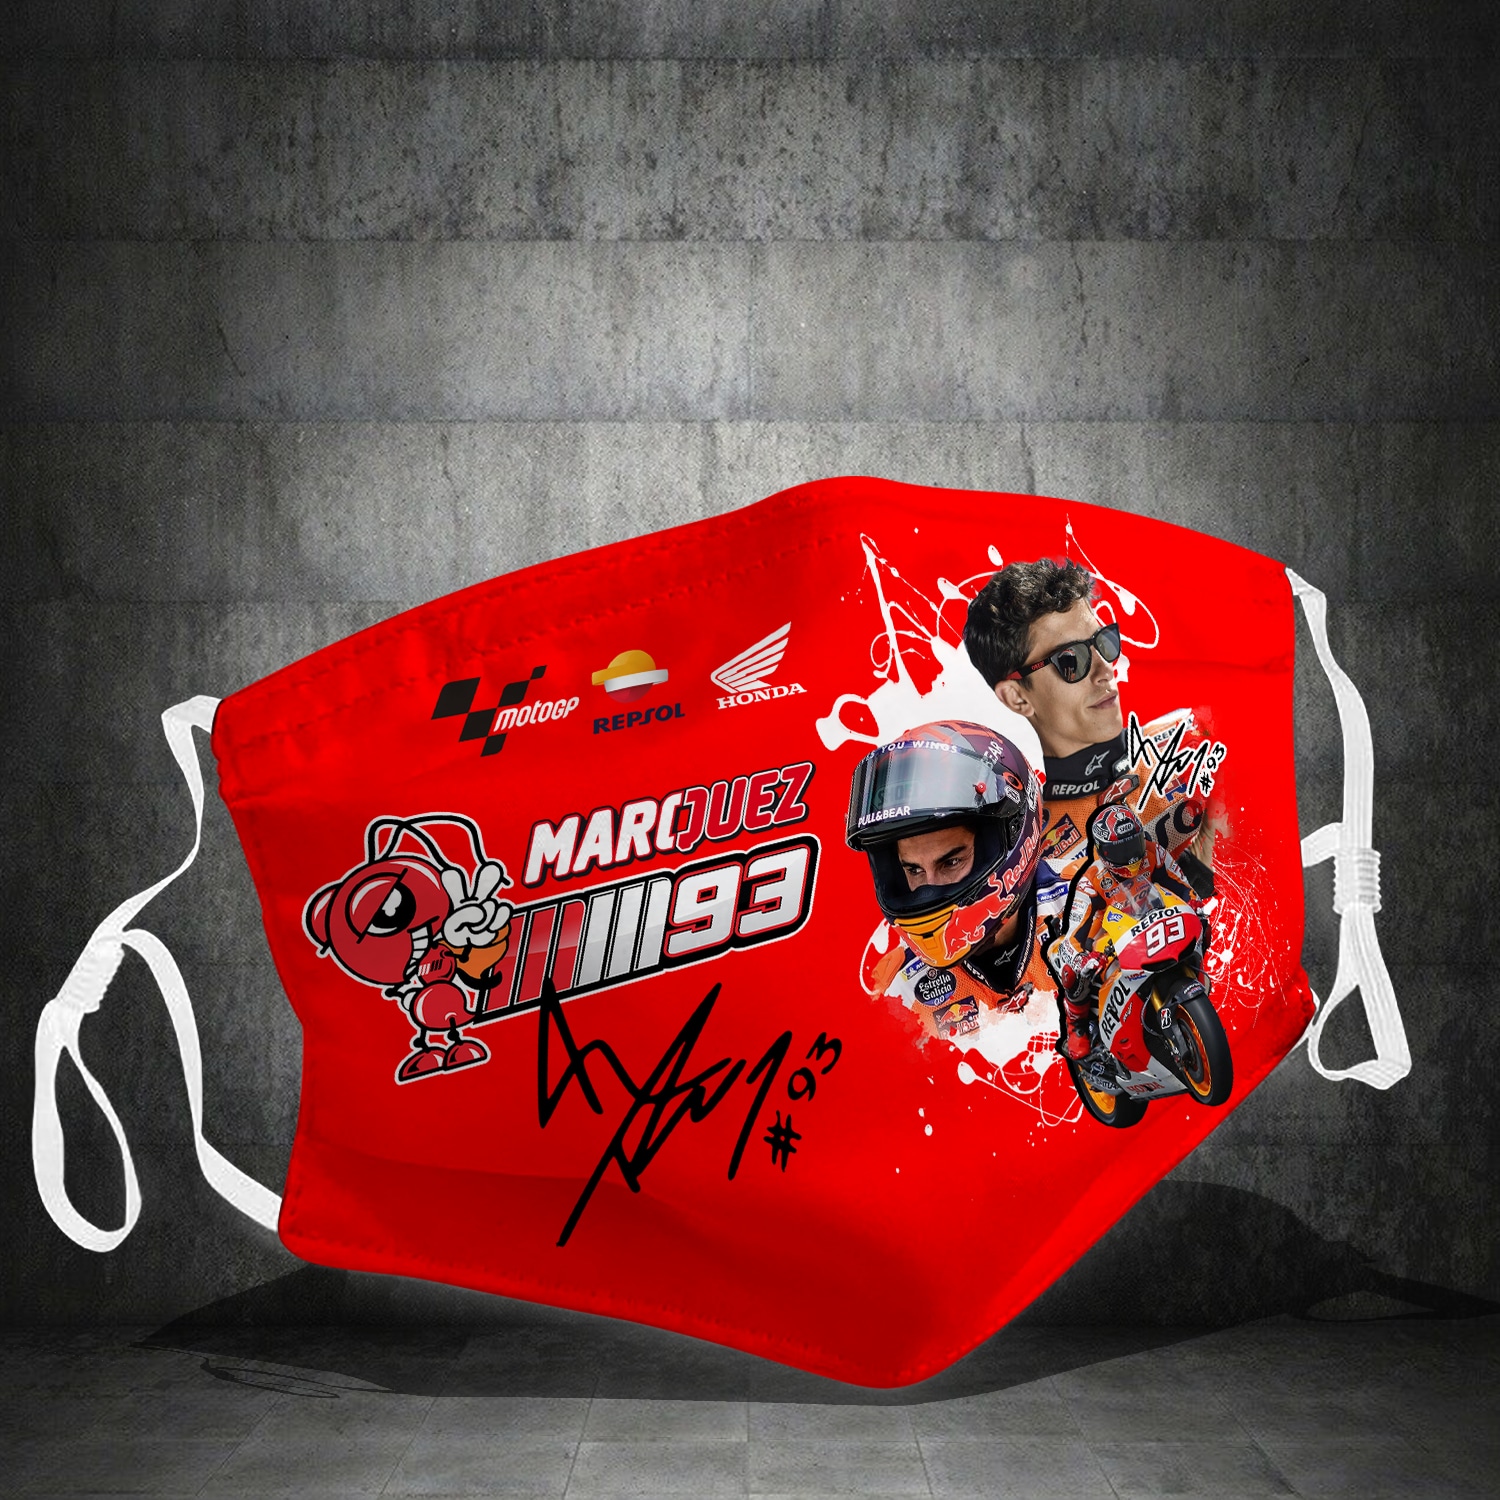 Marc Marquez 93 face mask – Best Seller